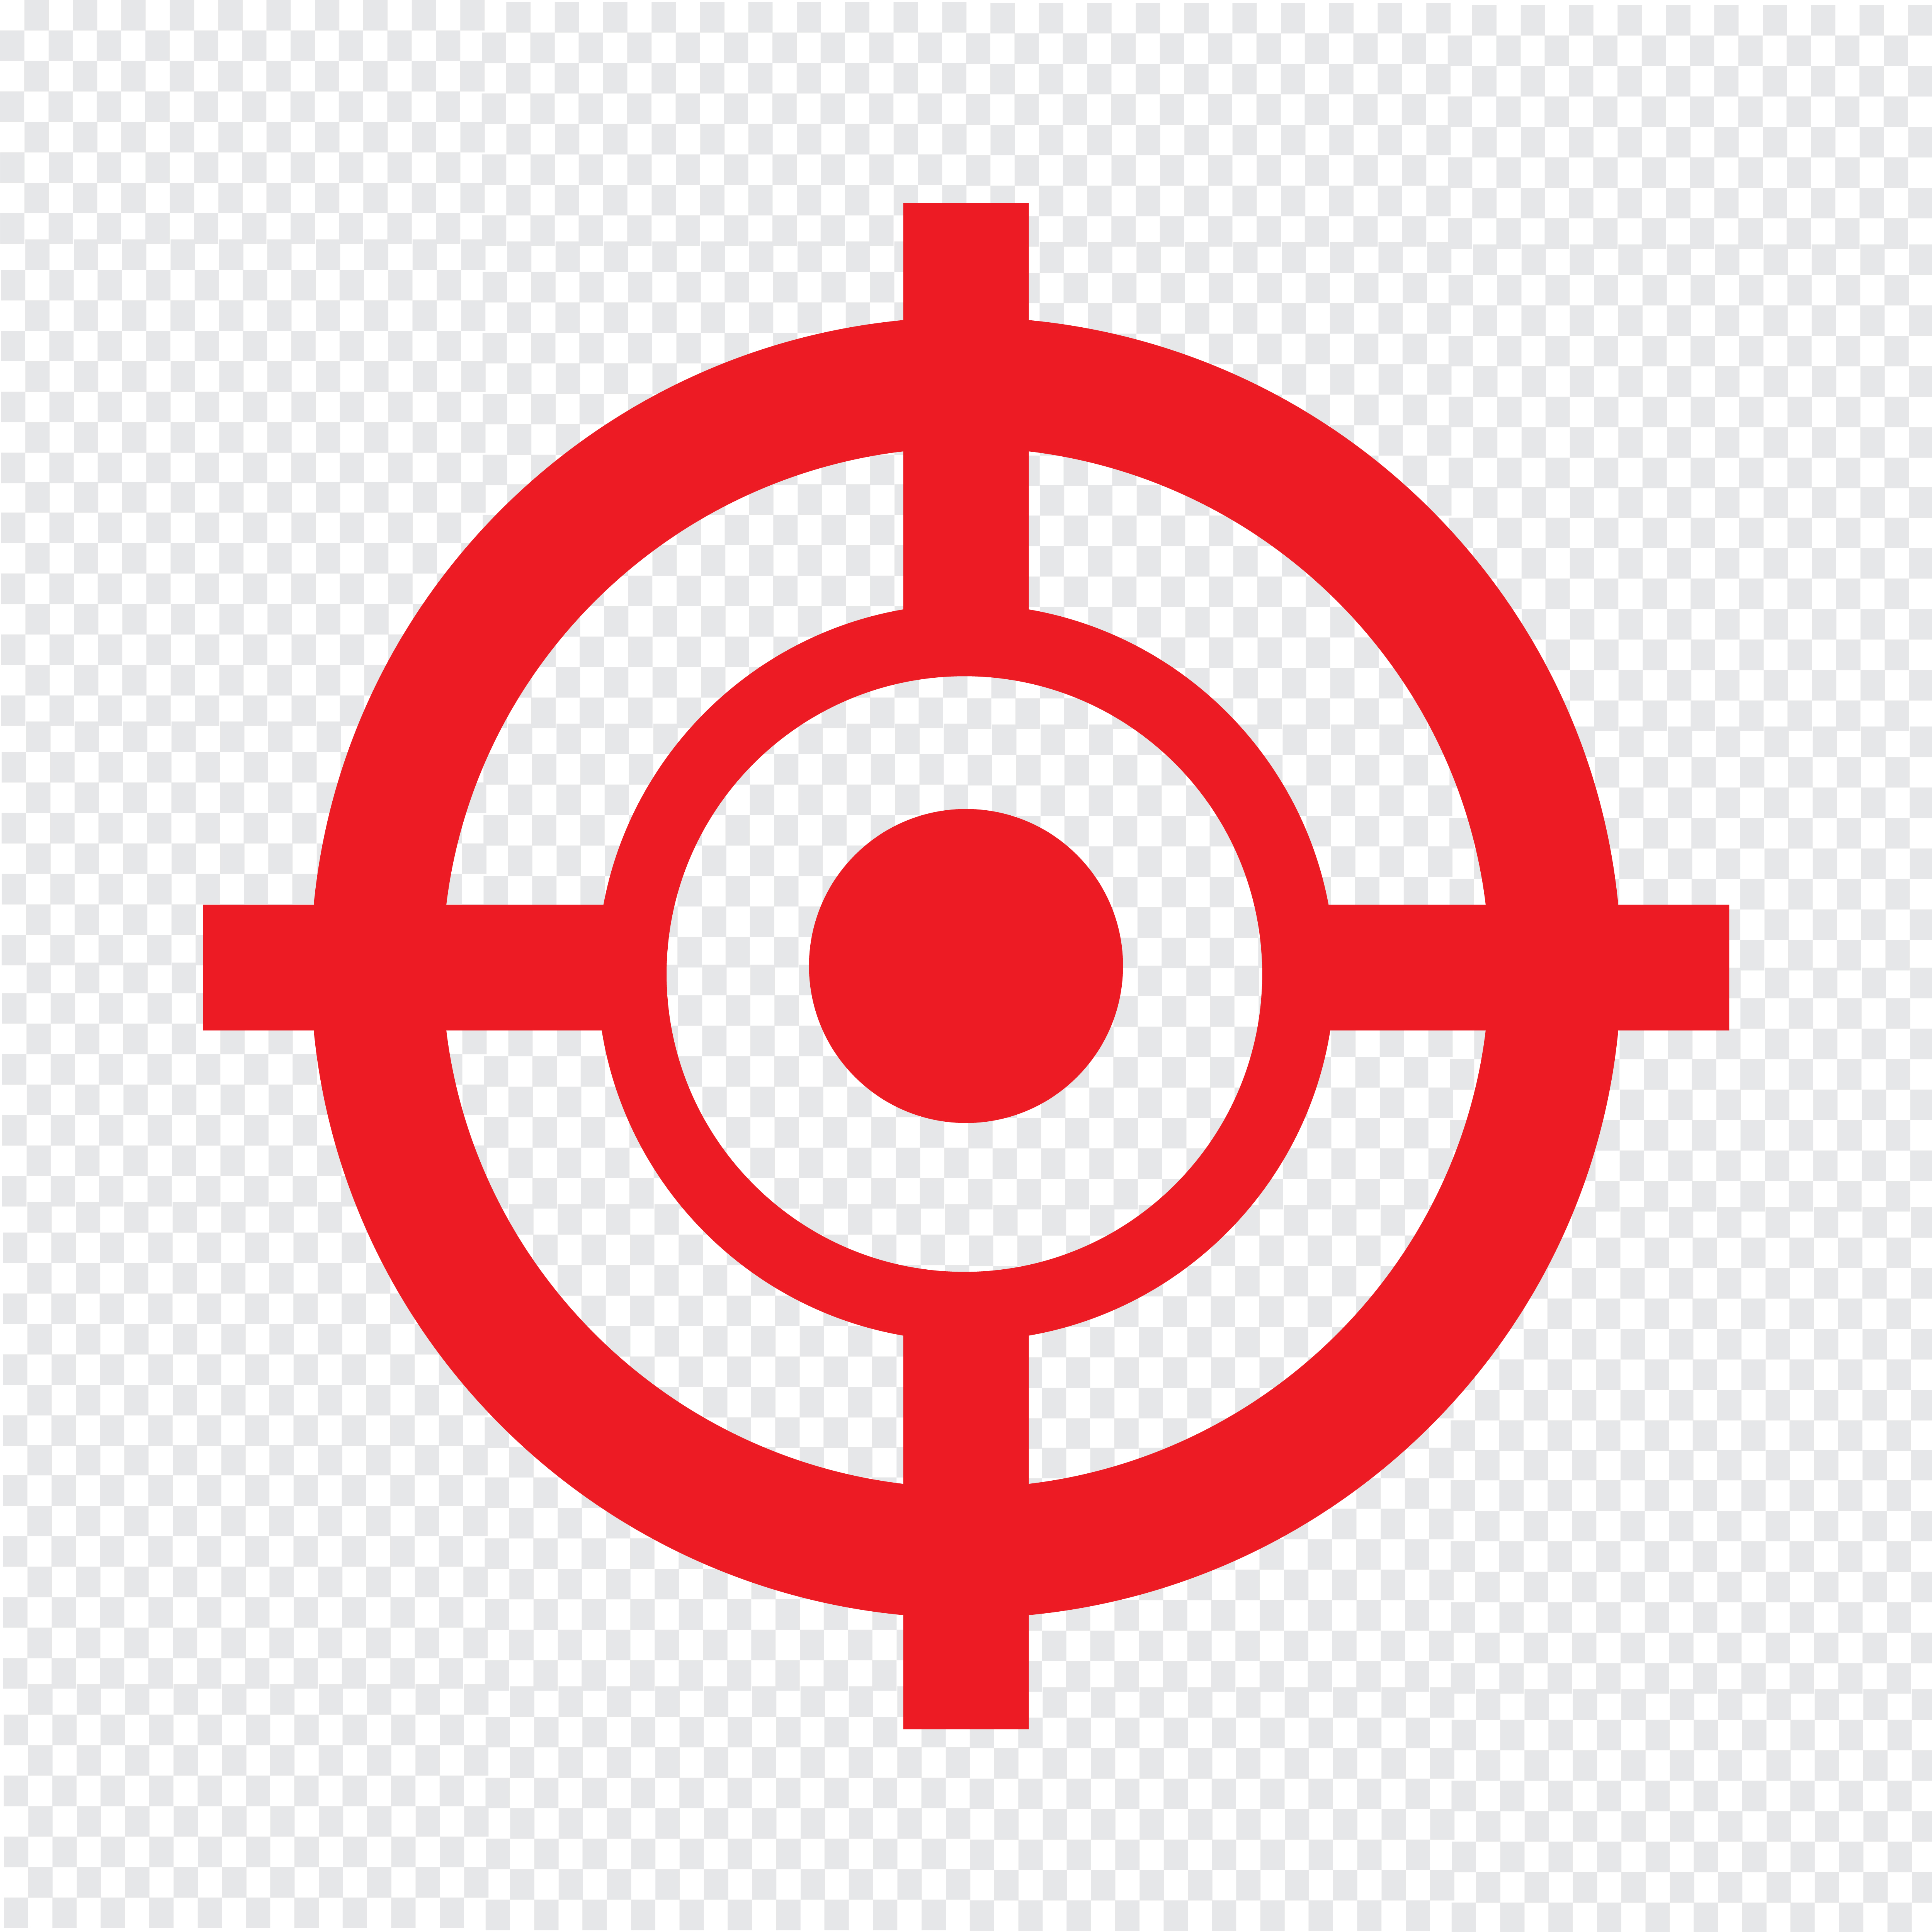 Download Target icon vector illustration - Download Free Vectors, Clipart Graphics & Vector Art